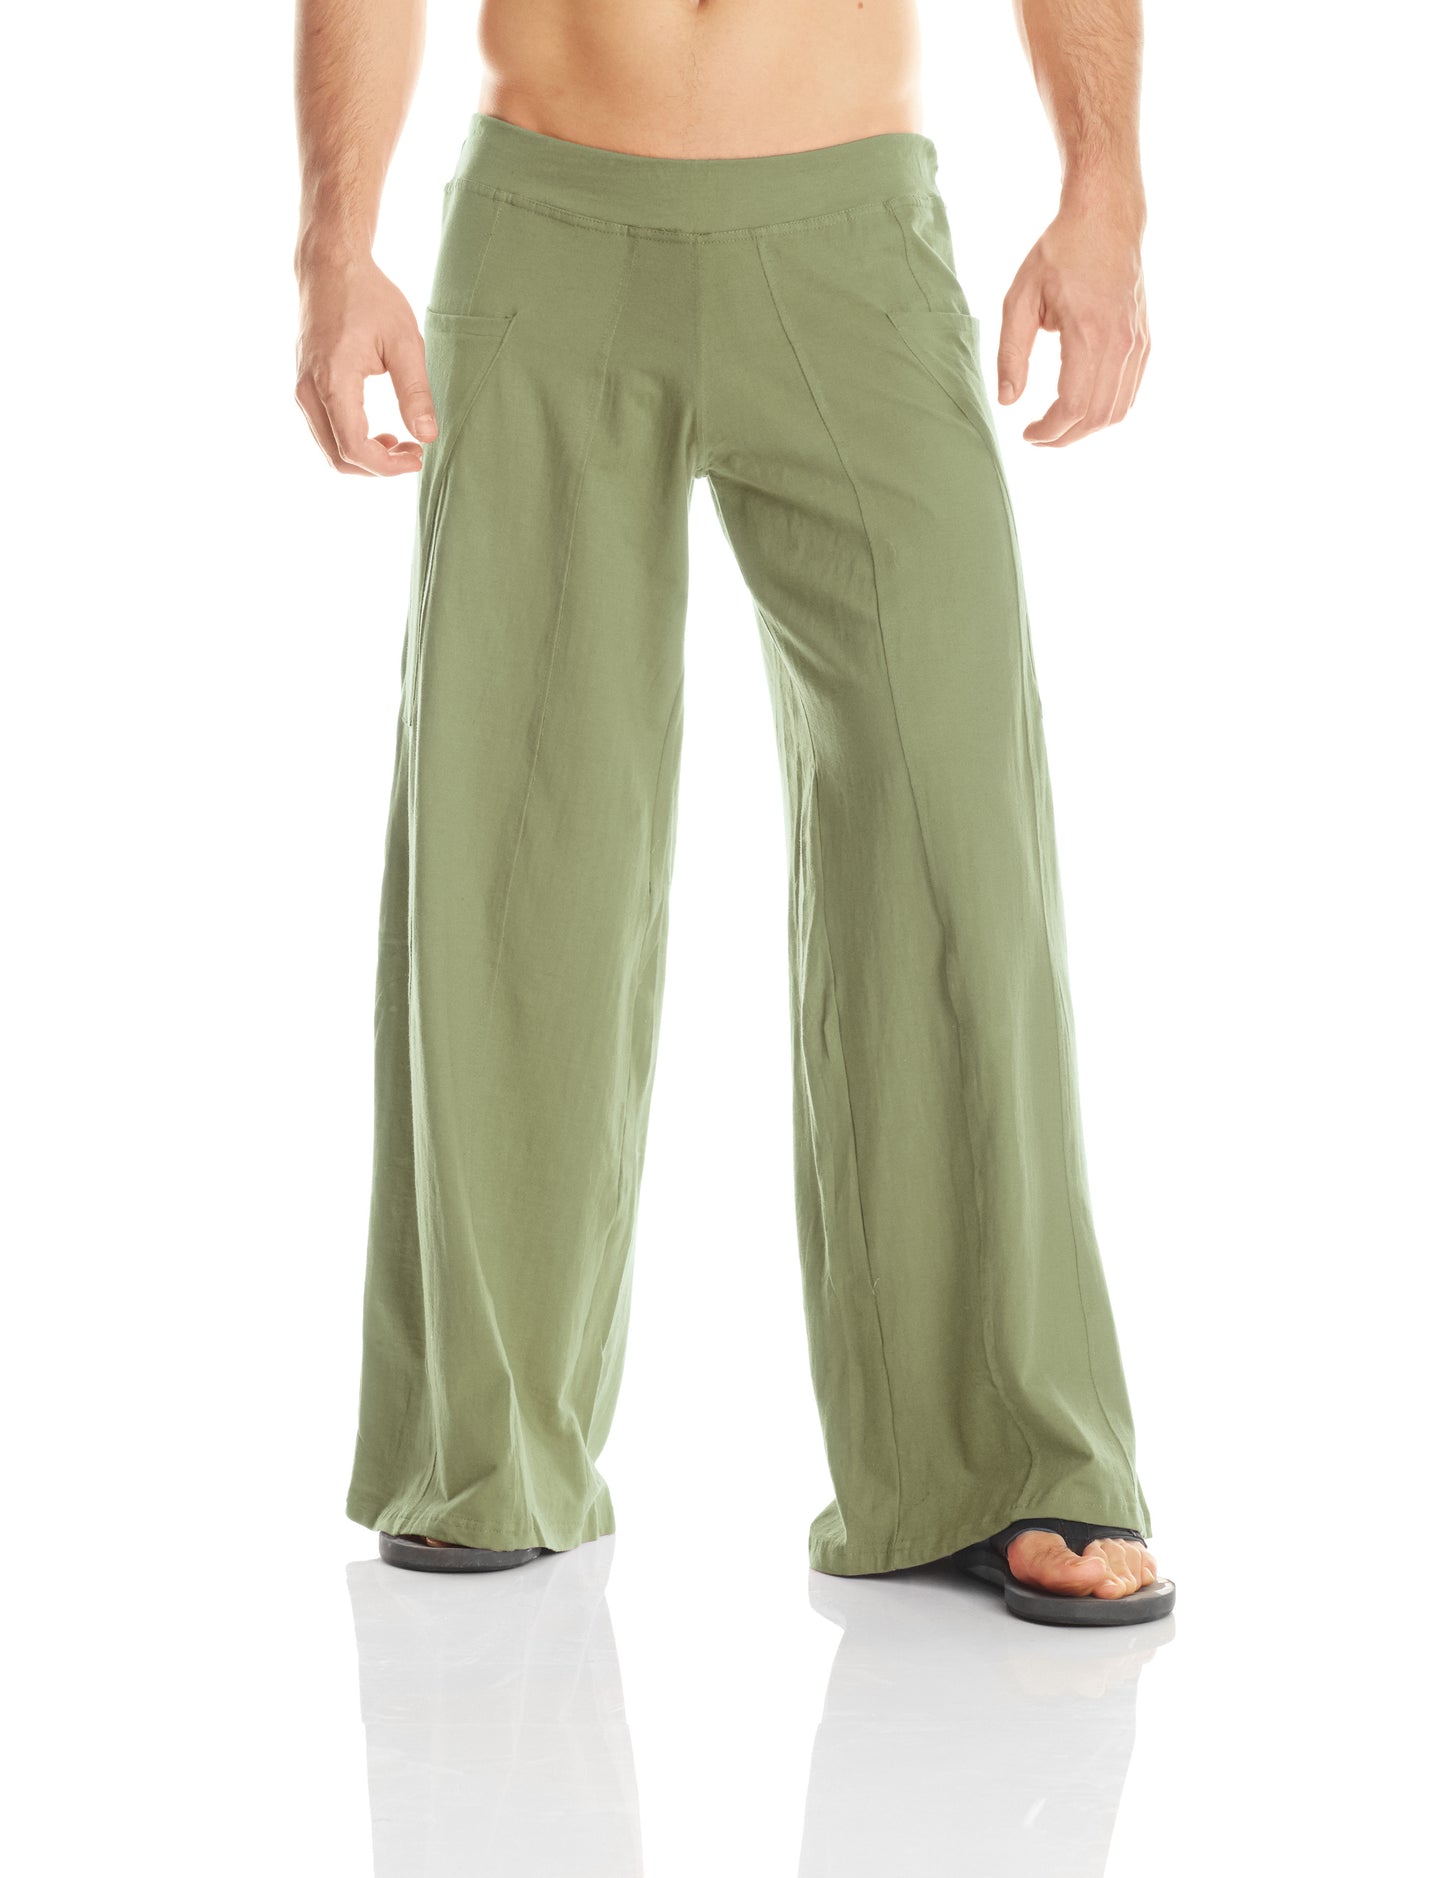 M141 Unisex Yoga Pocket Pants - Mishu Boutique